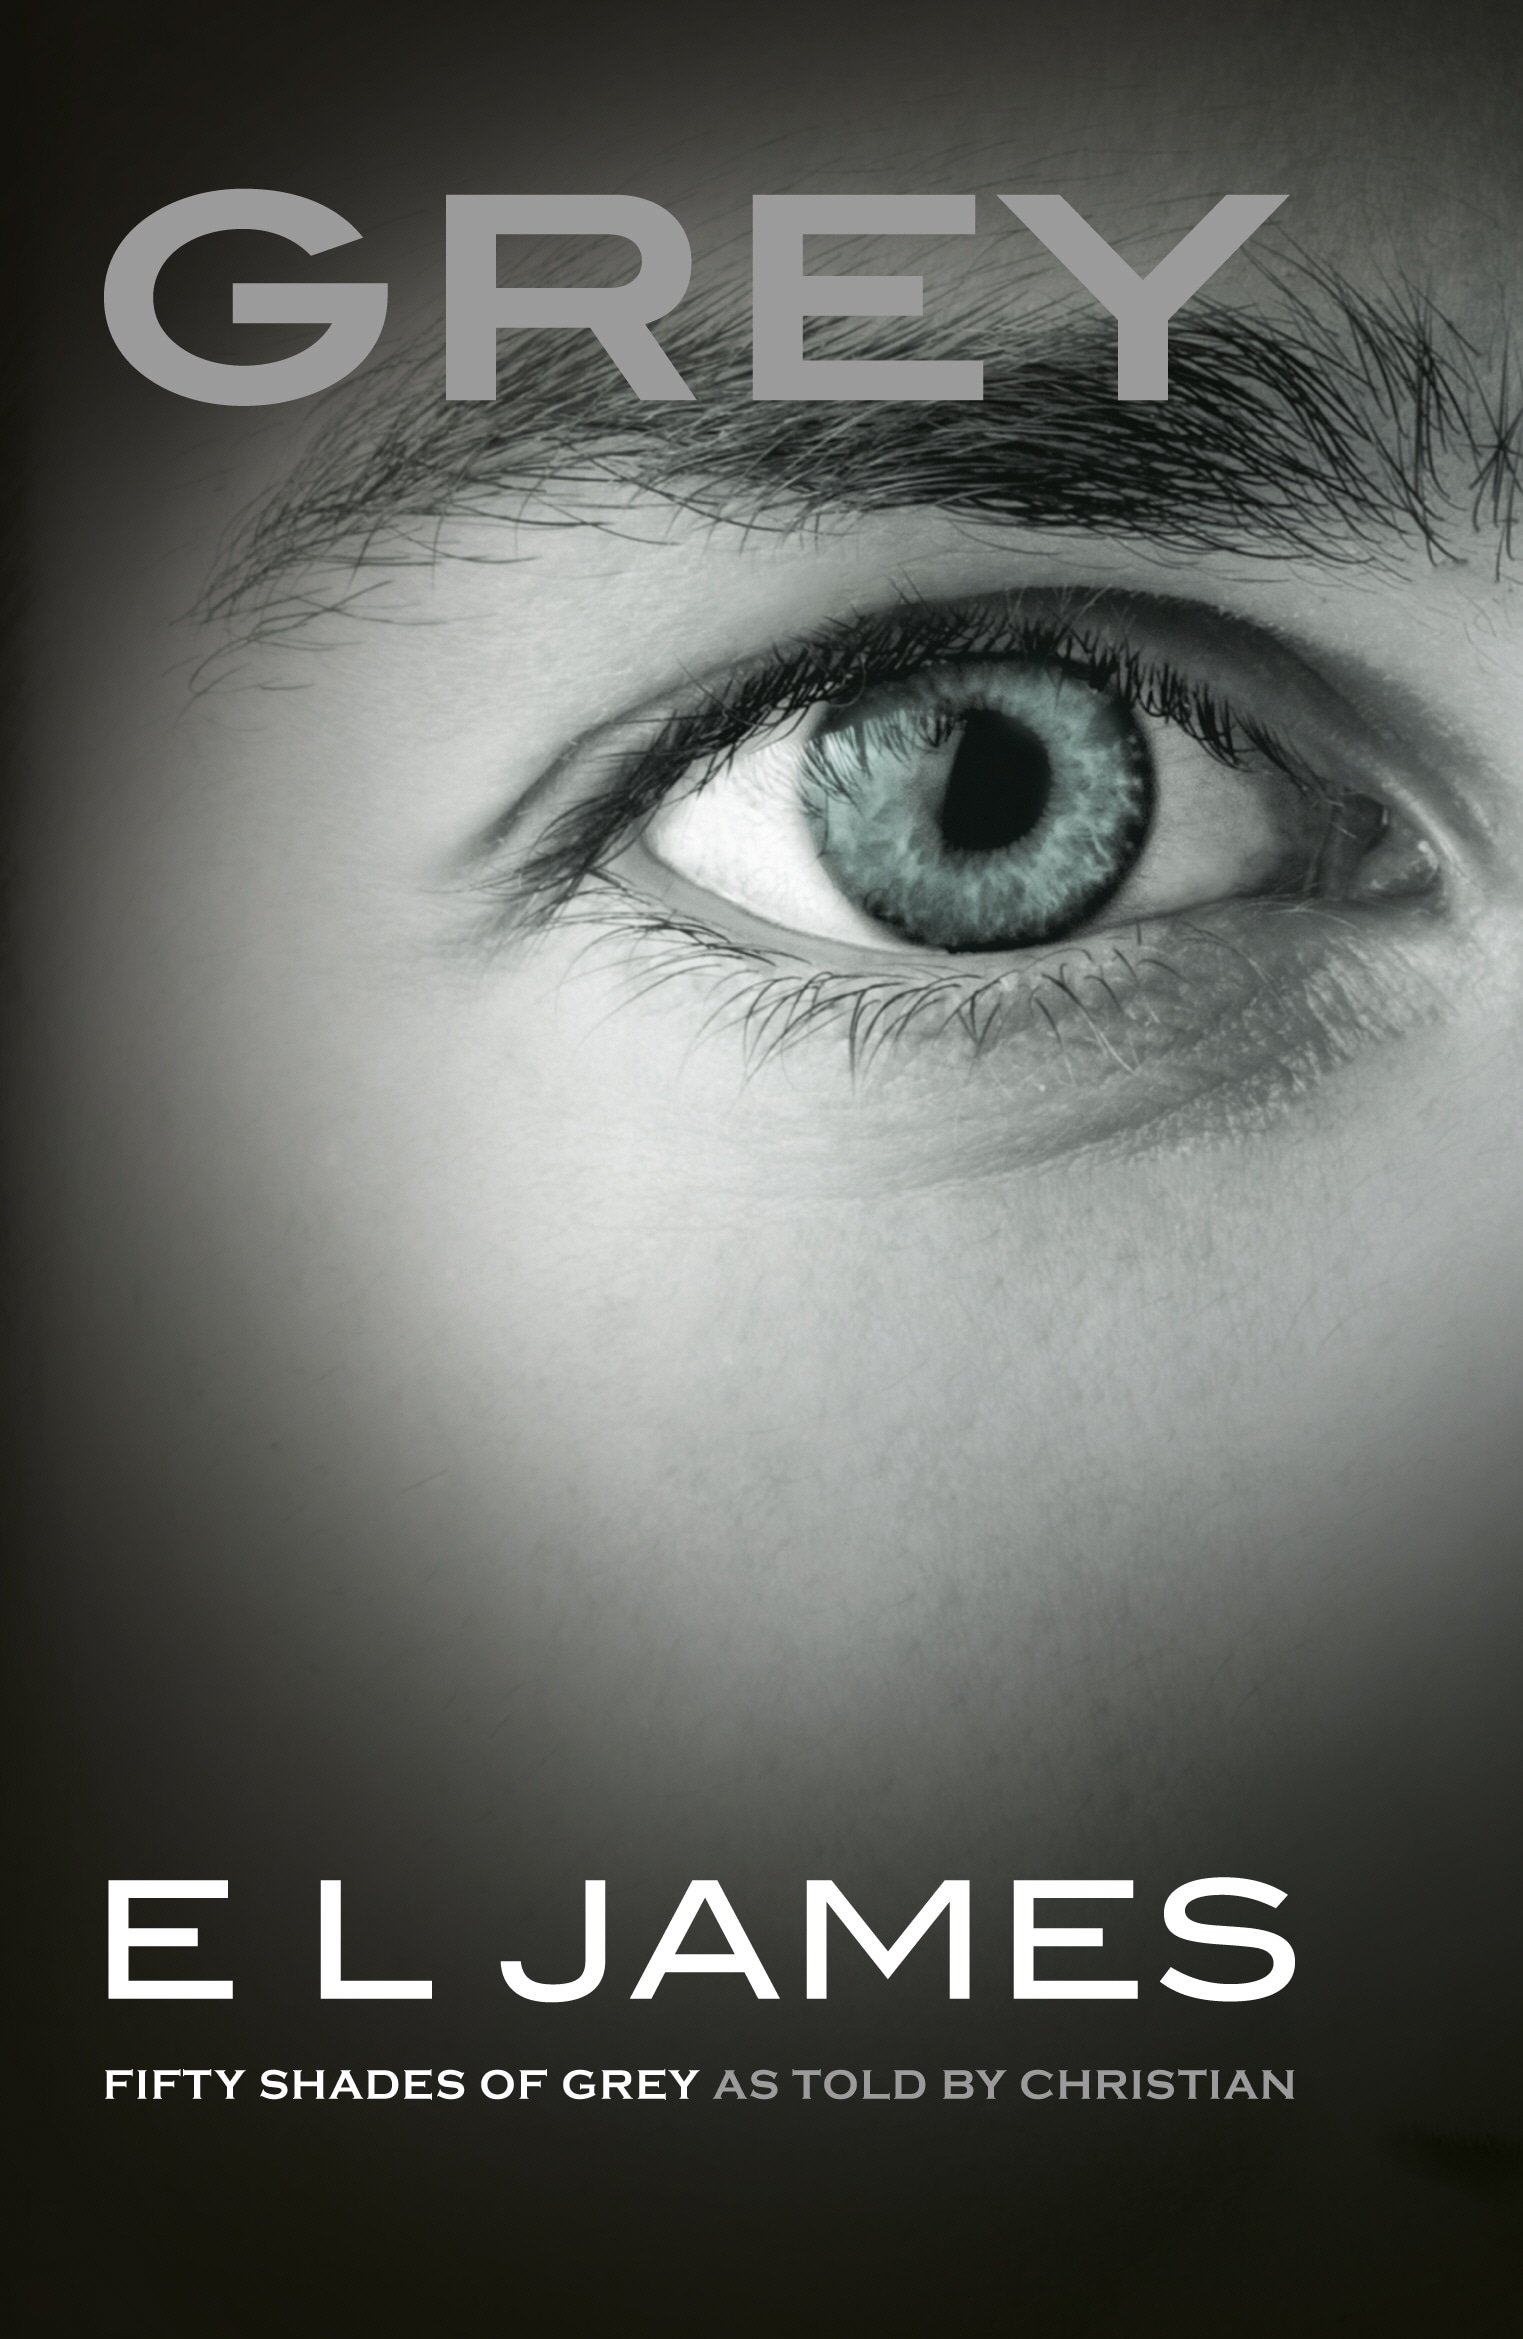 Book “Grey” by E L James — June 18, 2015